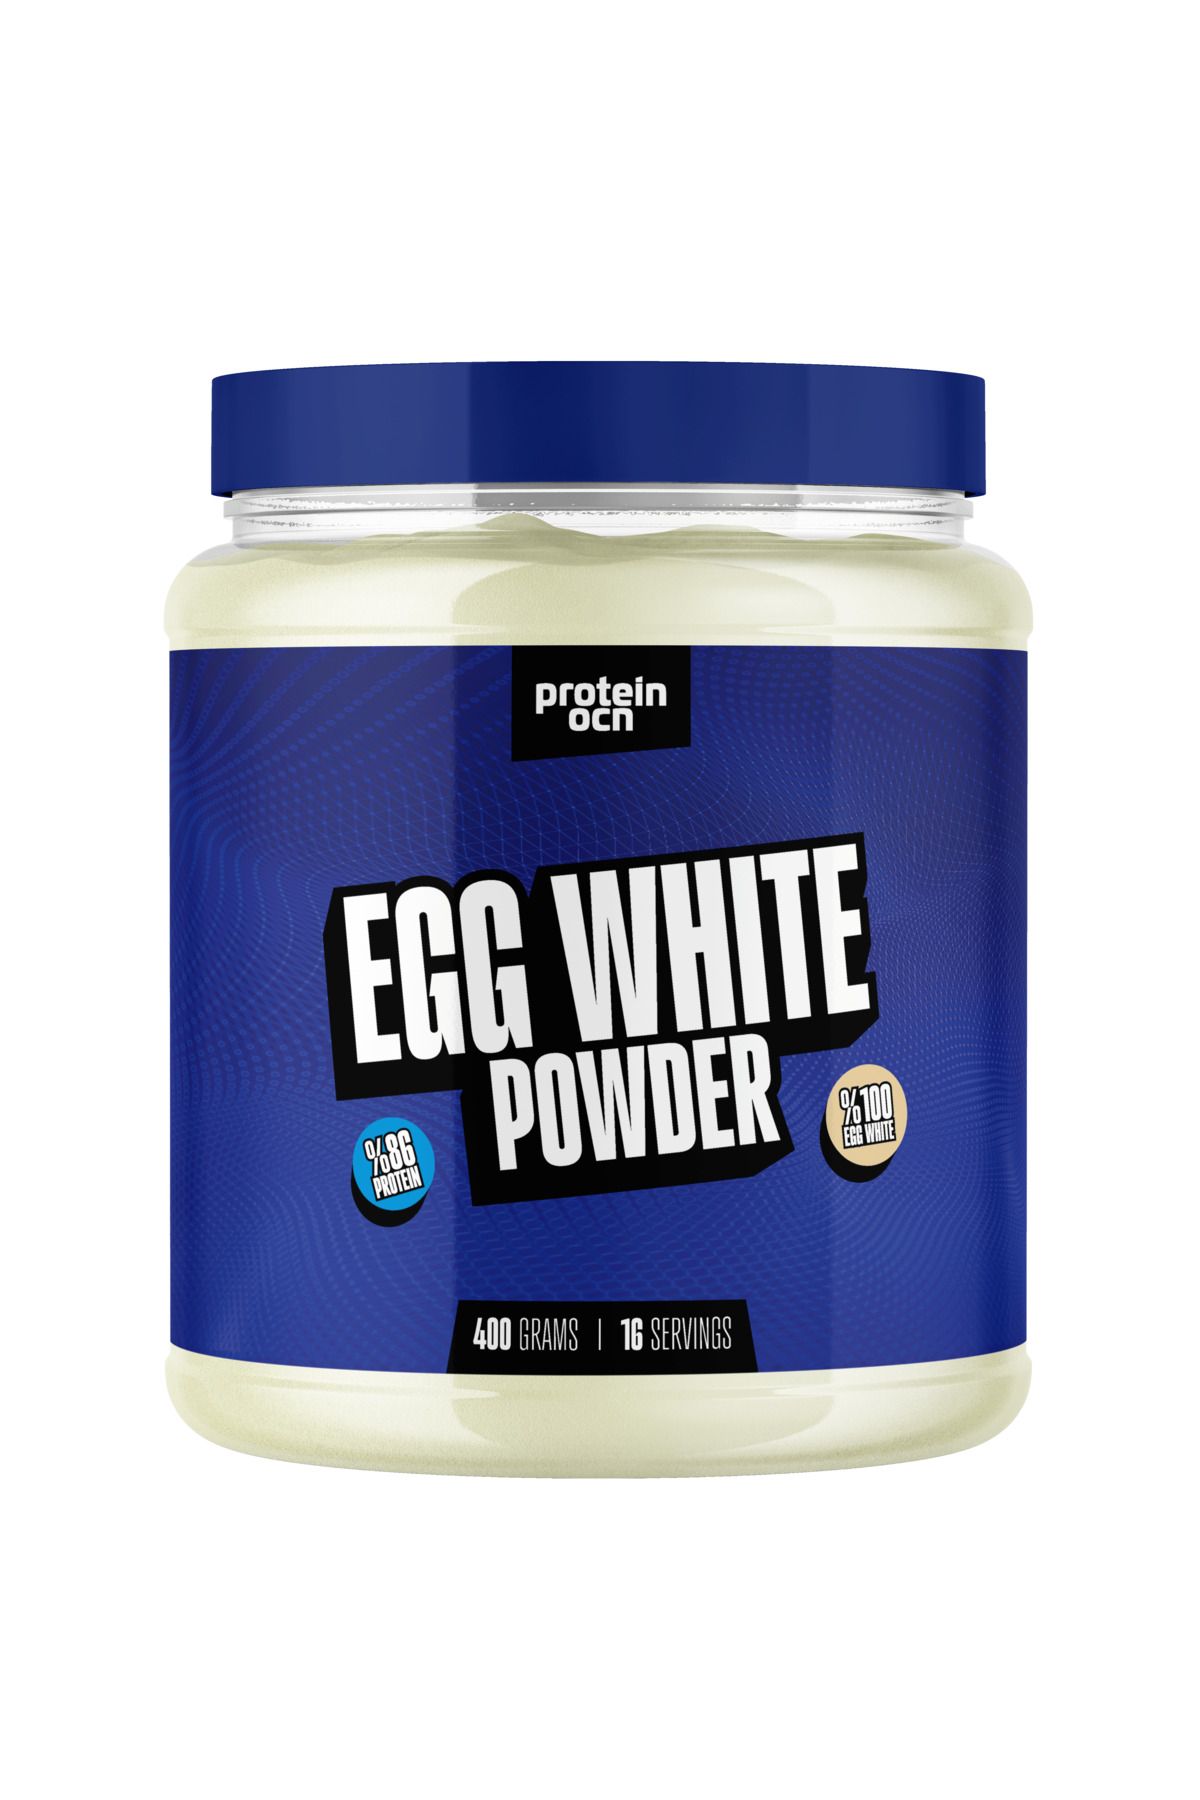 Proteinocean Egg White Powder - 400g - 16 Servis